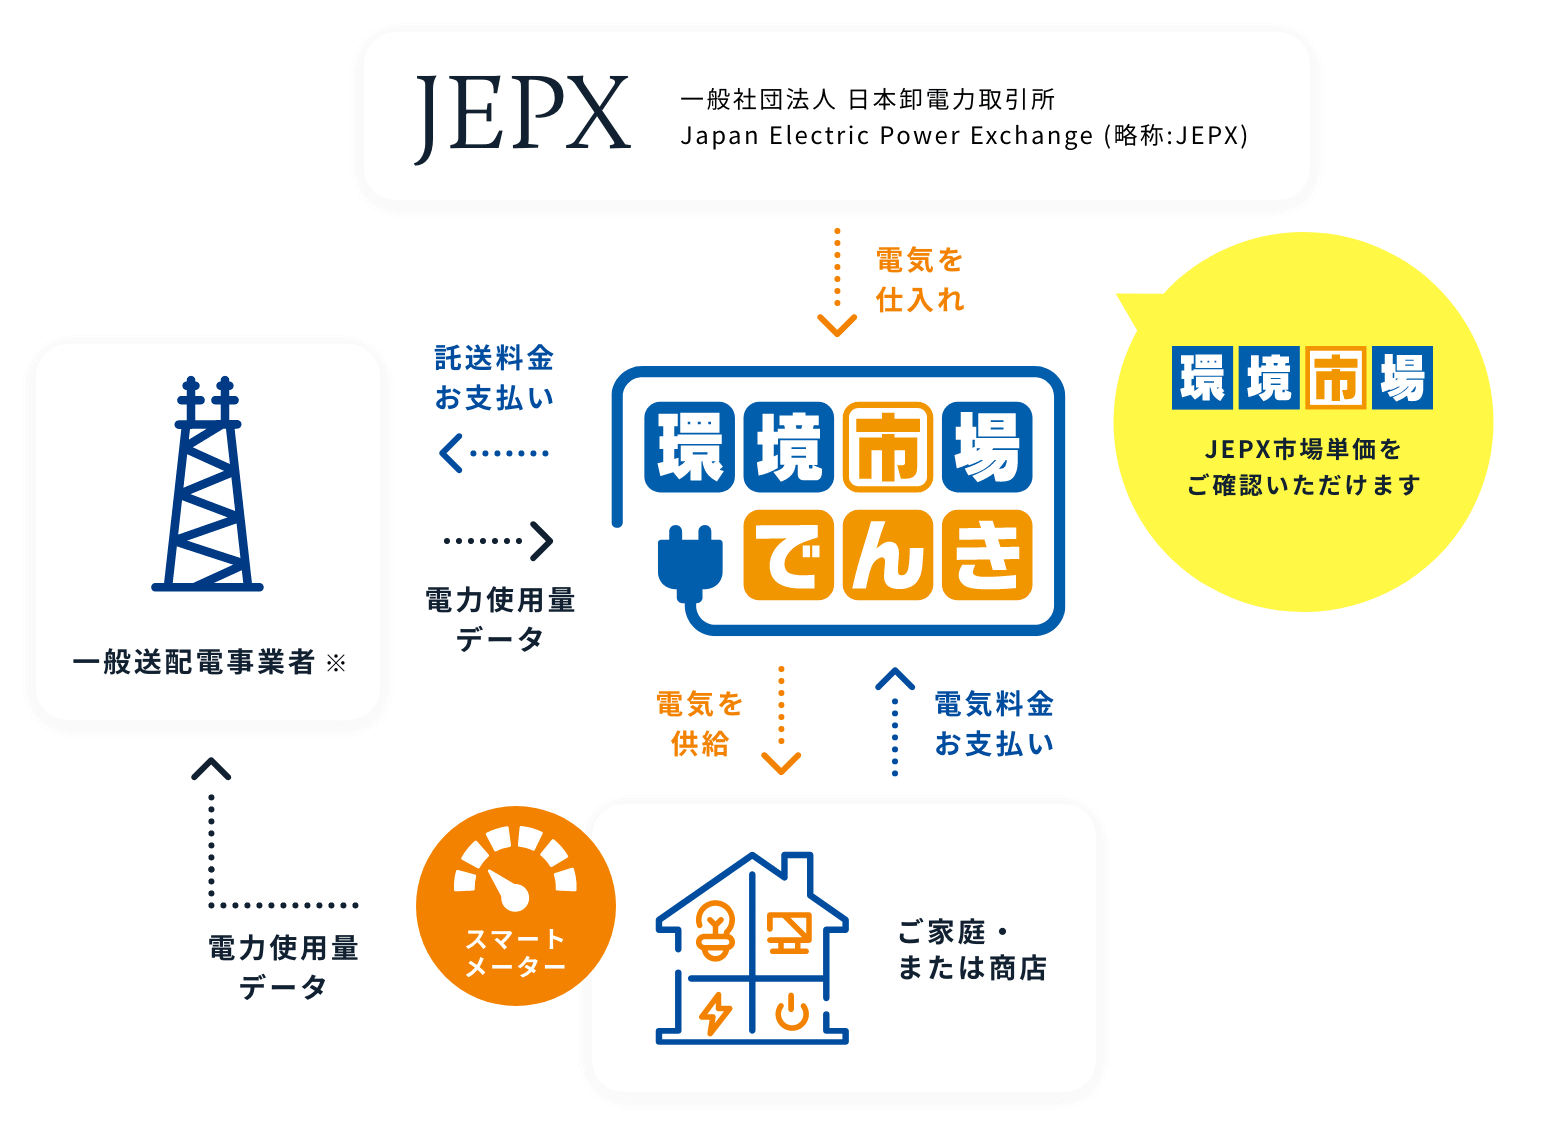 JEPX 一般社団法人 日本卸電力取引所Japan Electric Power Exchange (略称:JEPX)